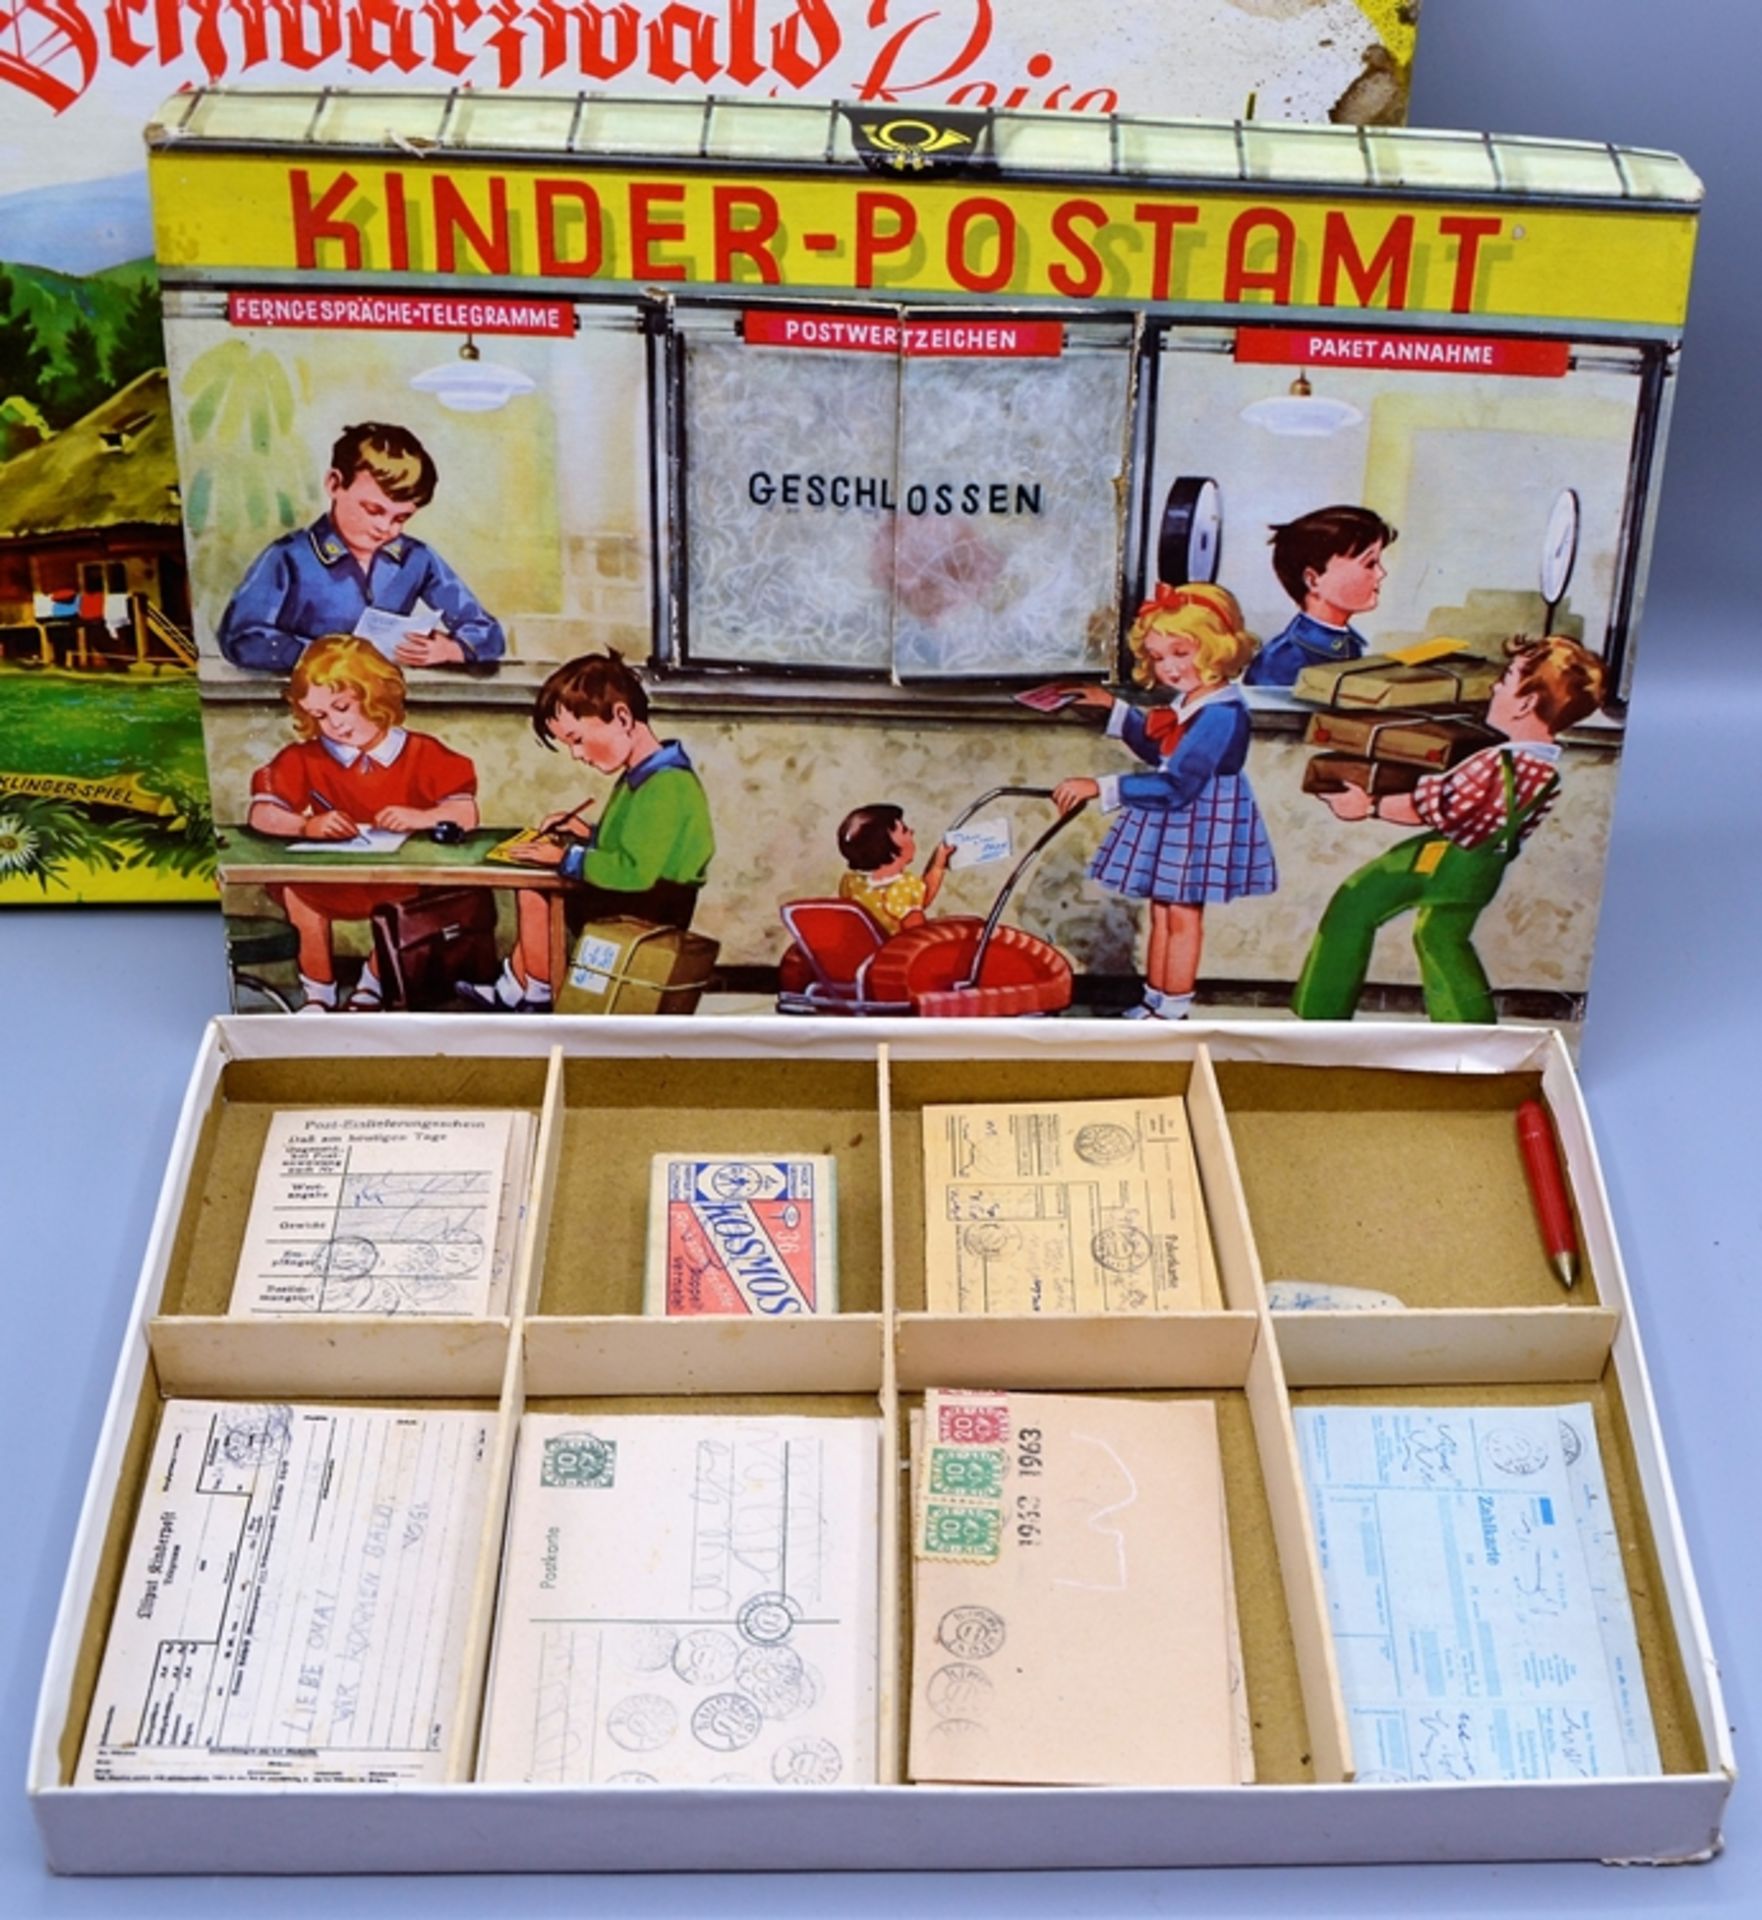 Würfelpuzzle Bilder Kubus alte Spiele Konvolut 4-teilig, darunter Kinder Postamt Abel-Klinger Spiel - Image 3 of 4